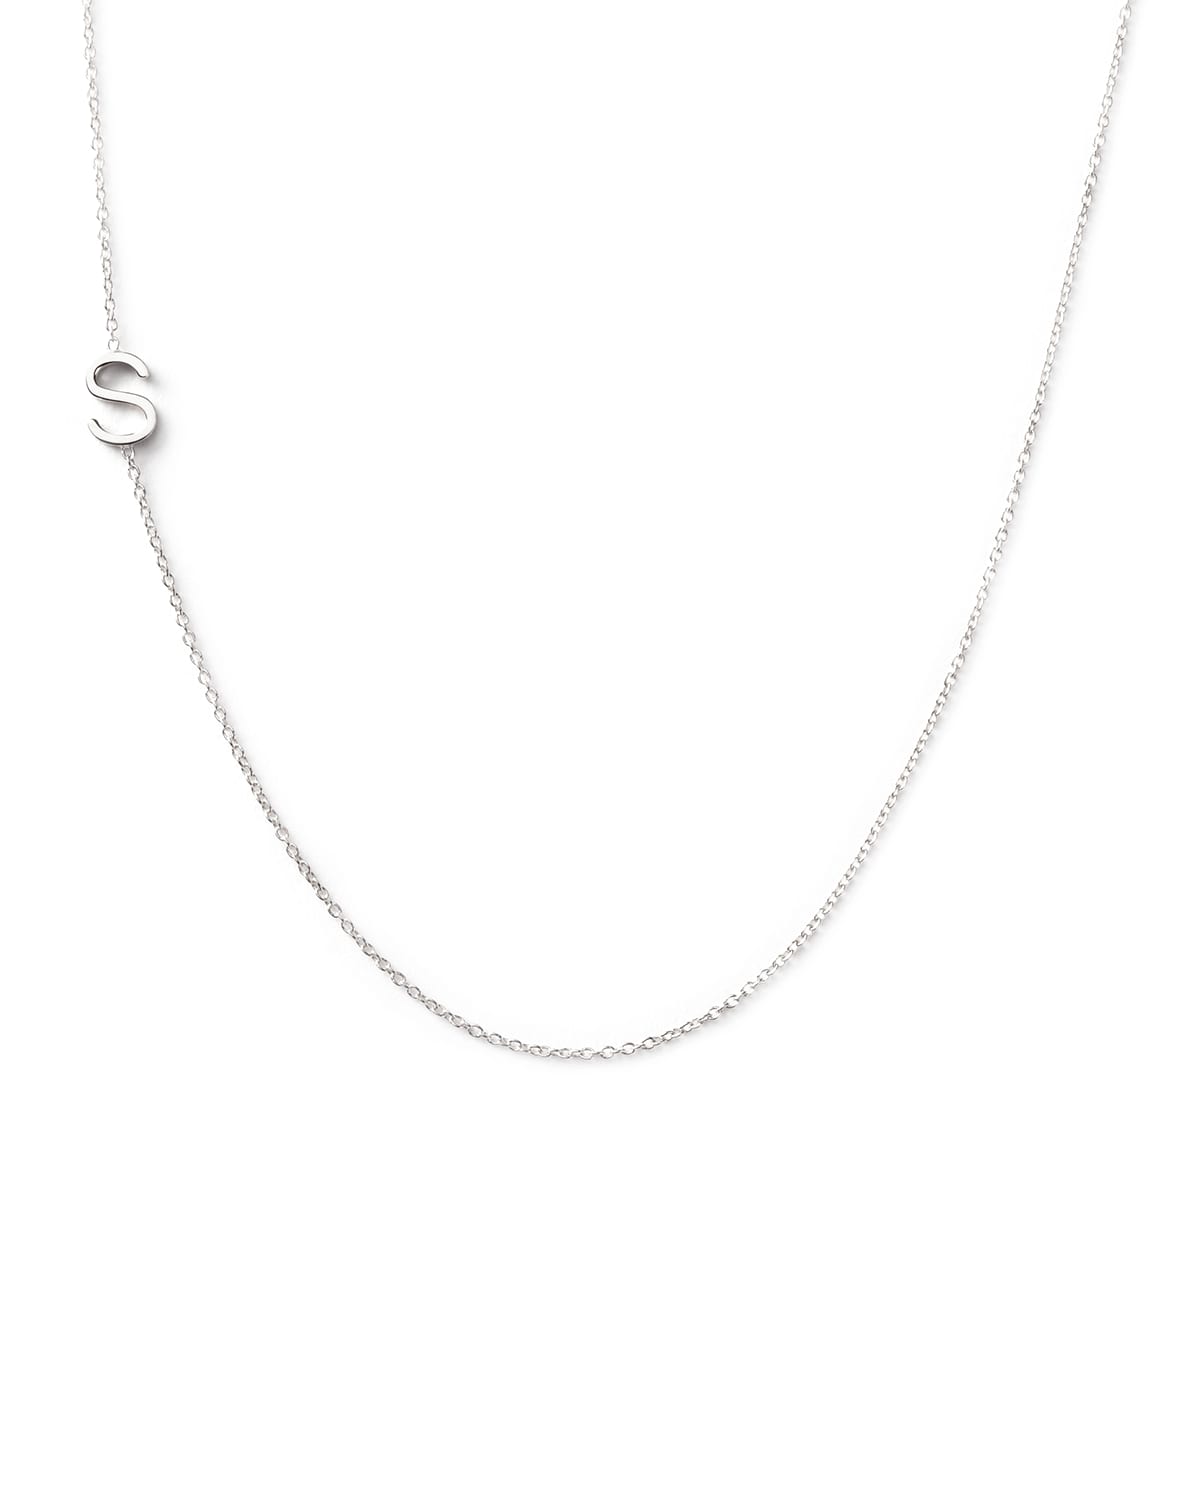 Maya Brenner Designs 14k White Gold Mini Letter Necklace In S